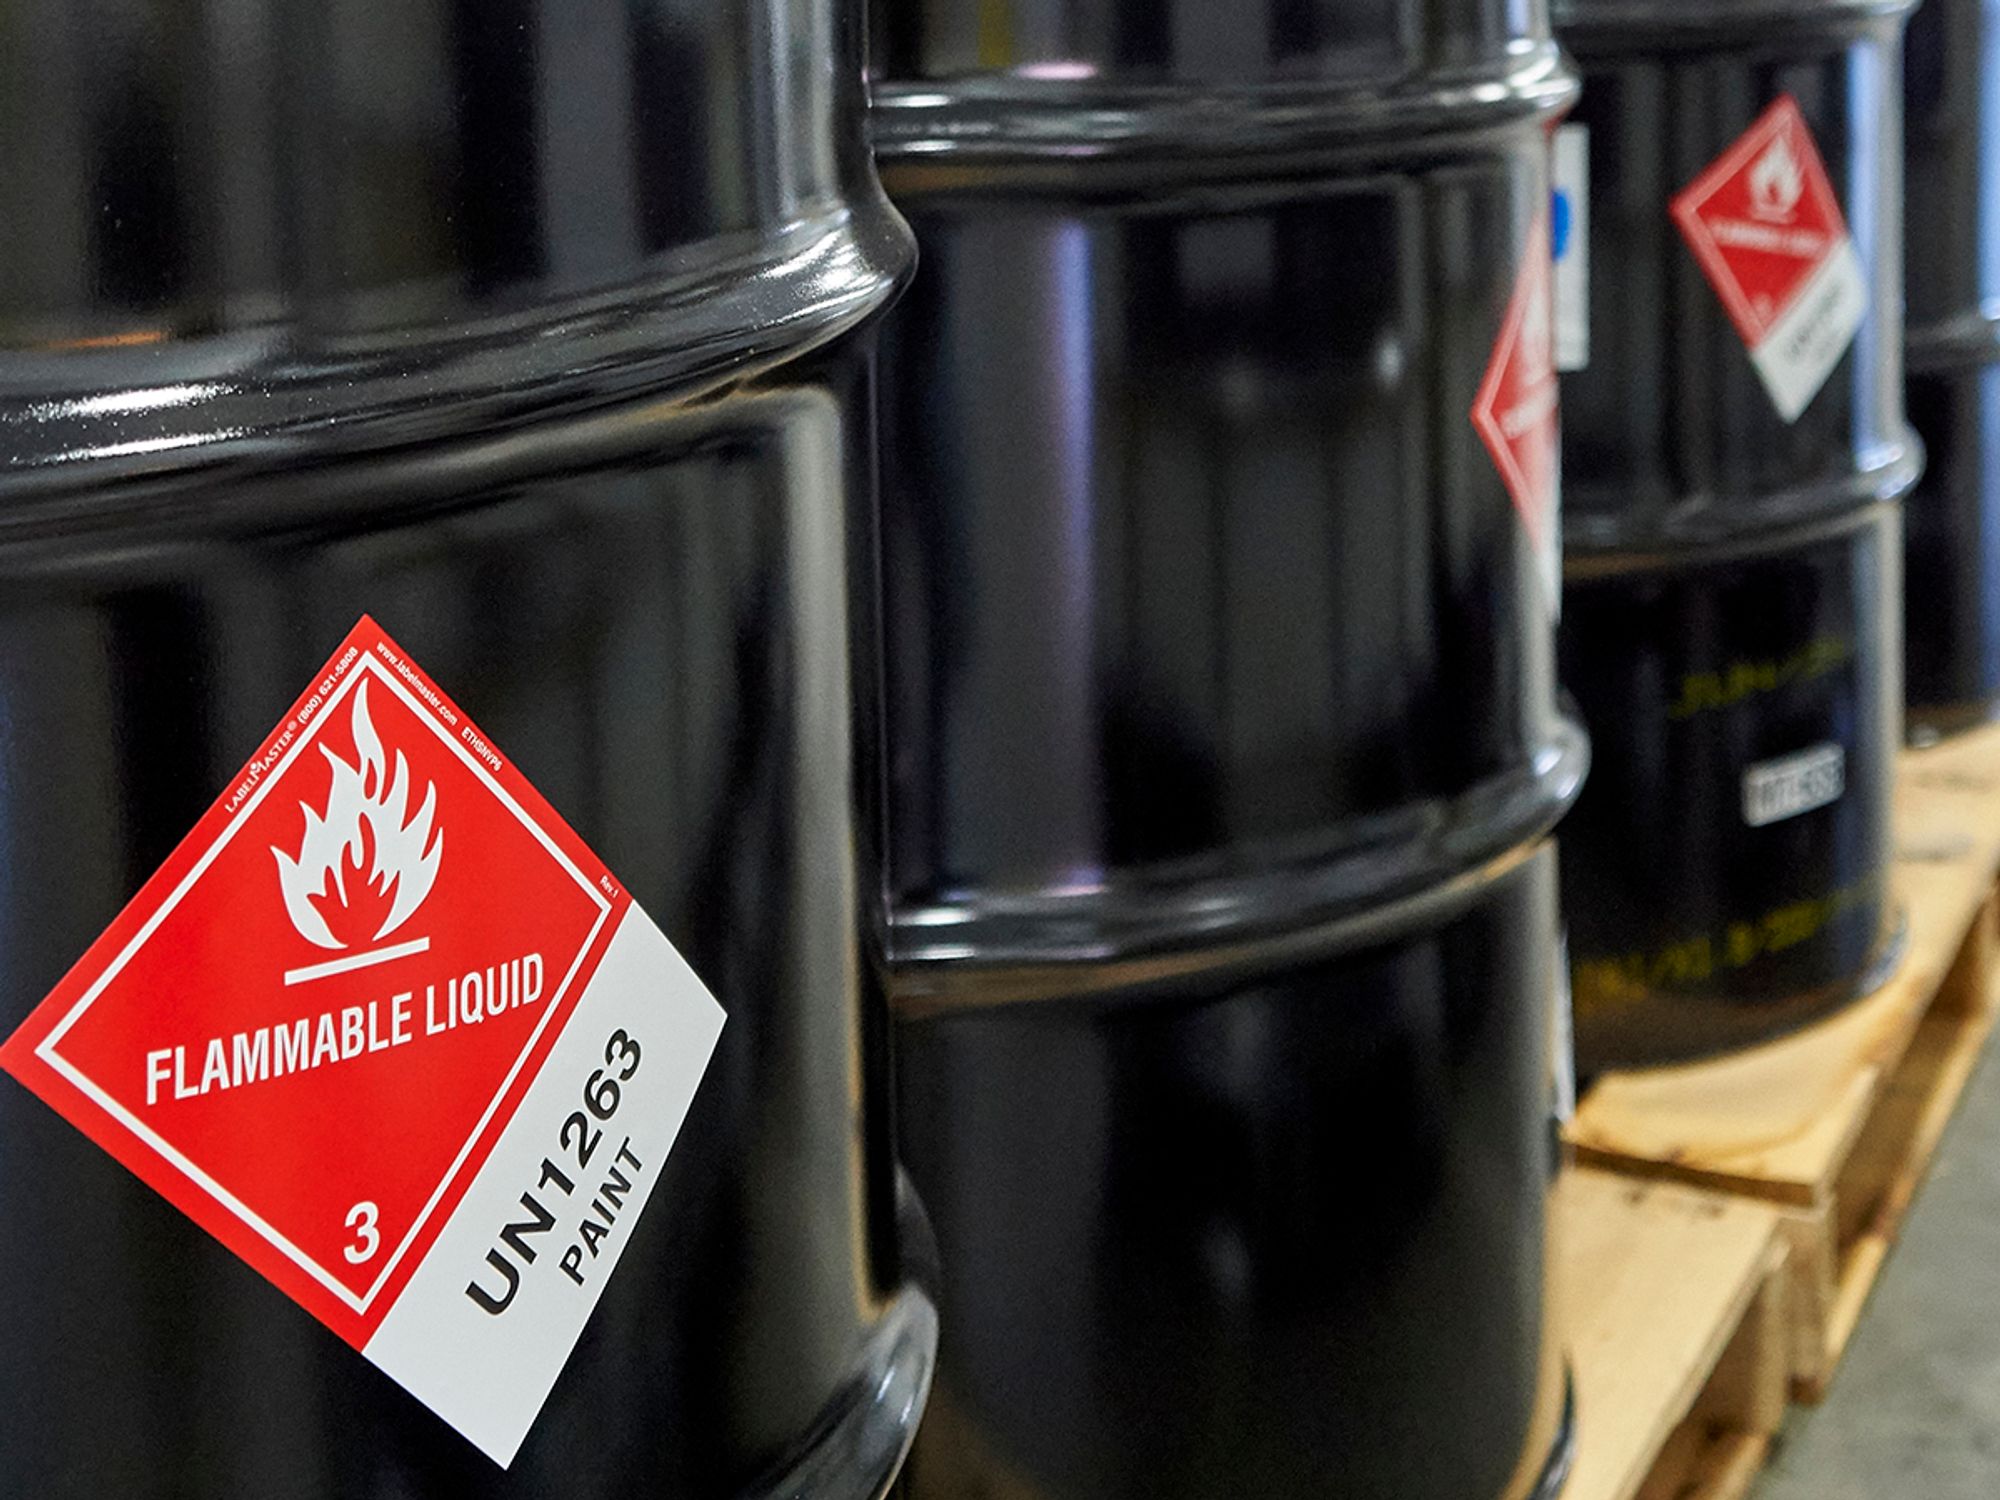 Key definitions: Flammable liquids